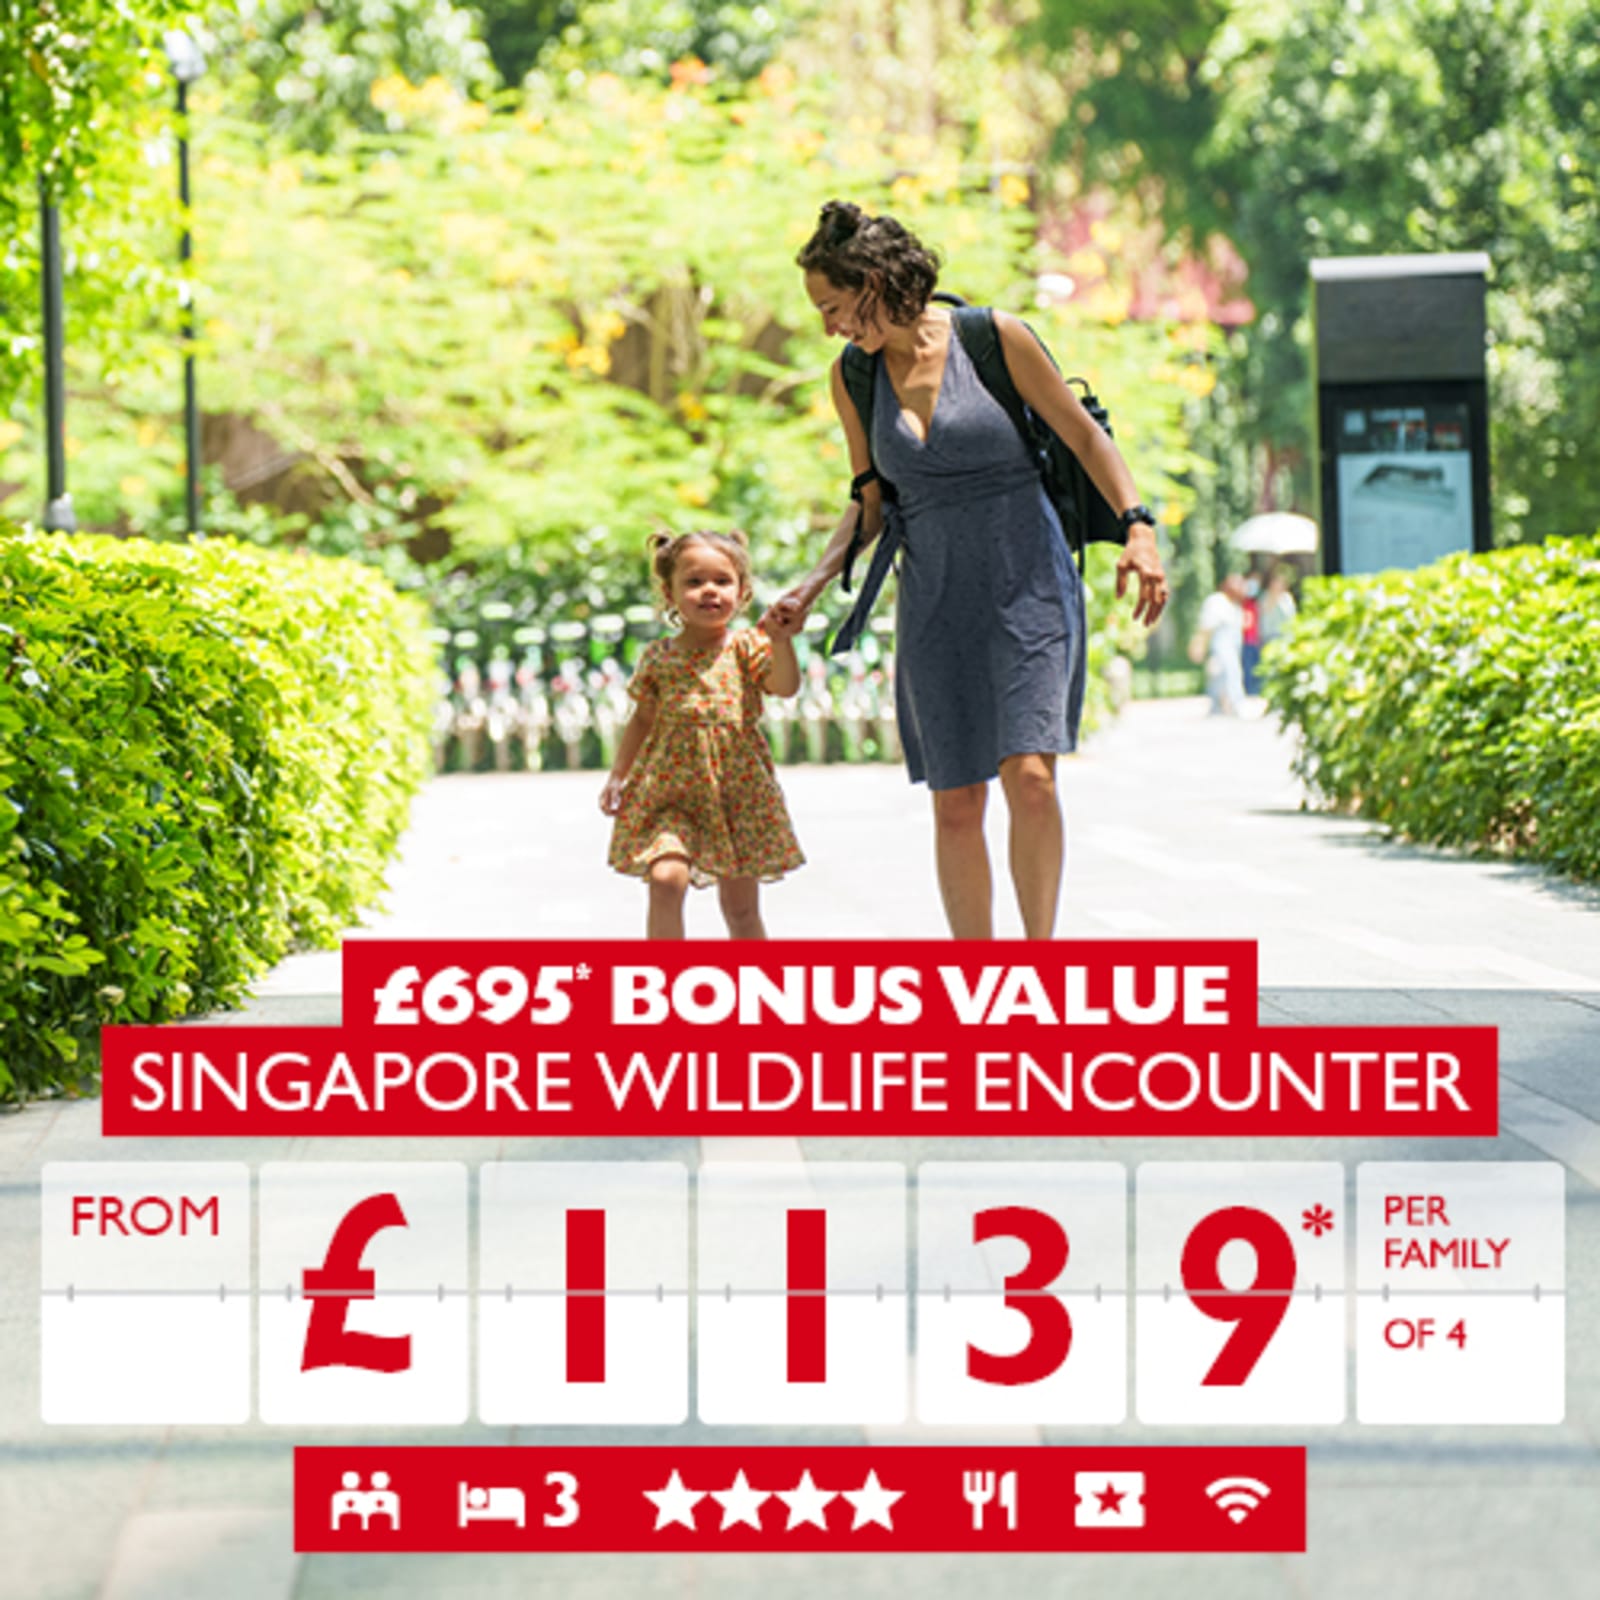 £695* bonus value Singapore Wildlife Encounter from £1139* per family of 4